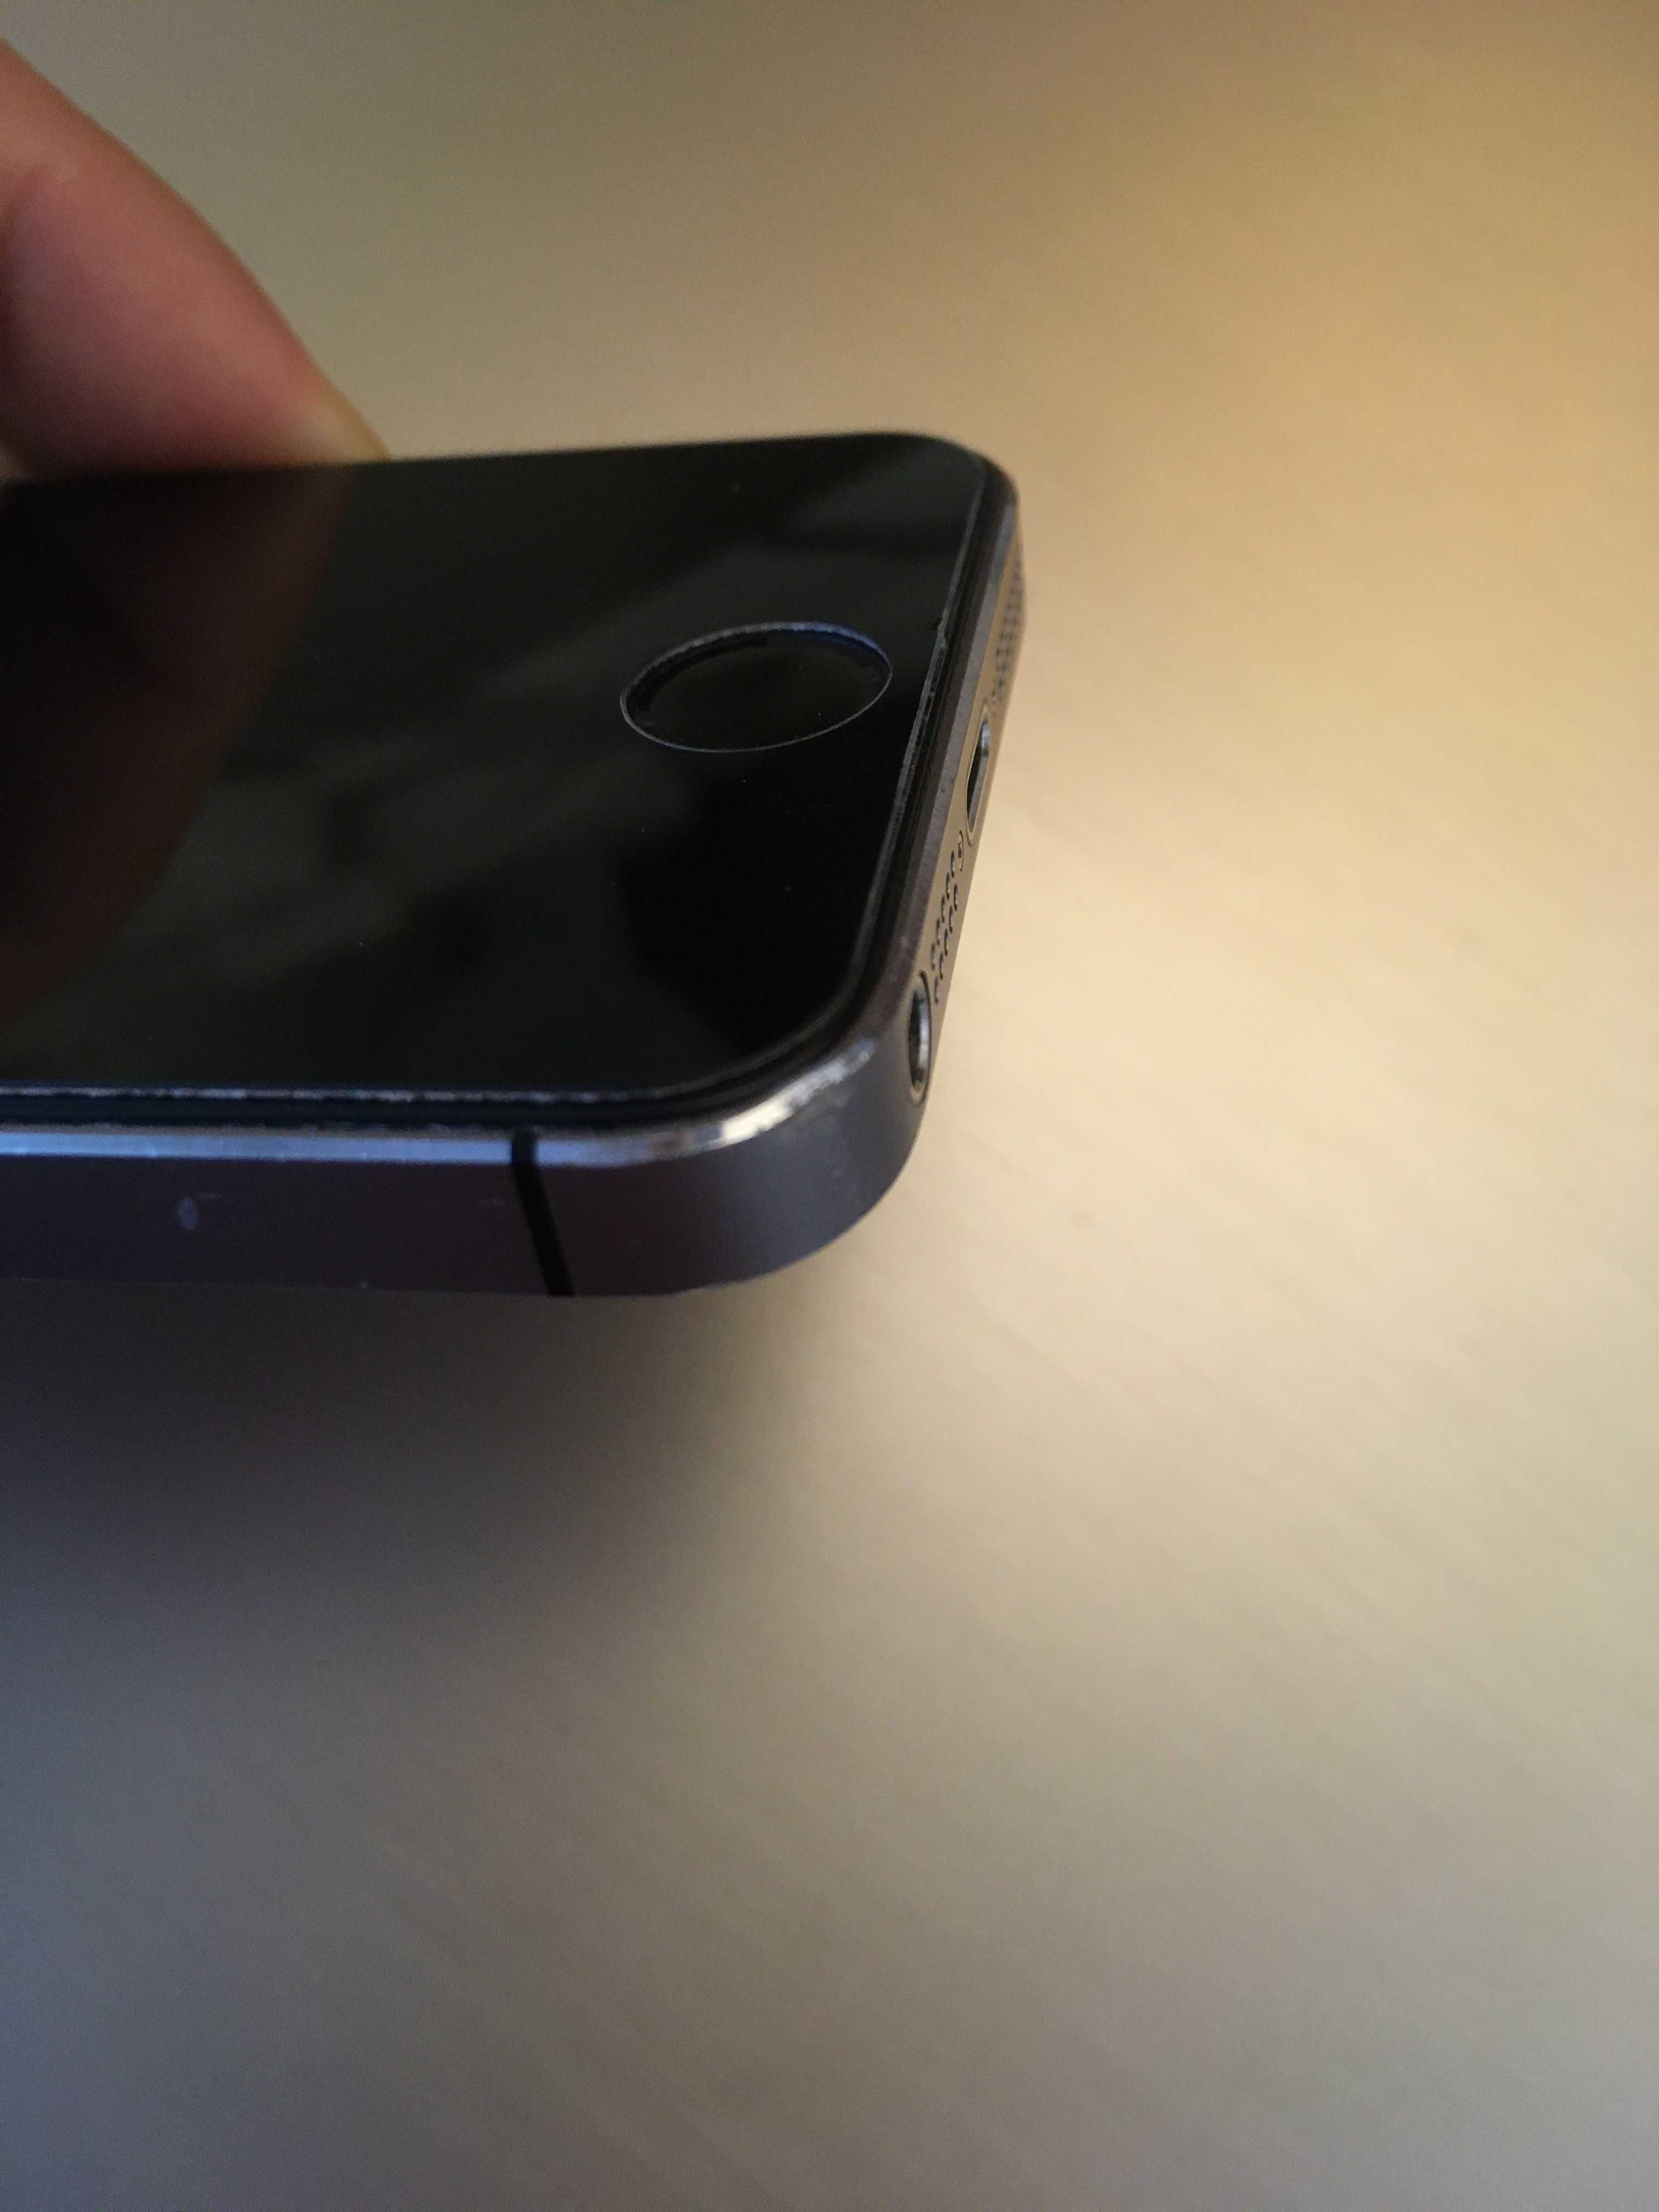 iPhone 5S 16GB, space grey, estetic 9.5/10